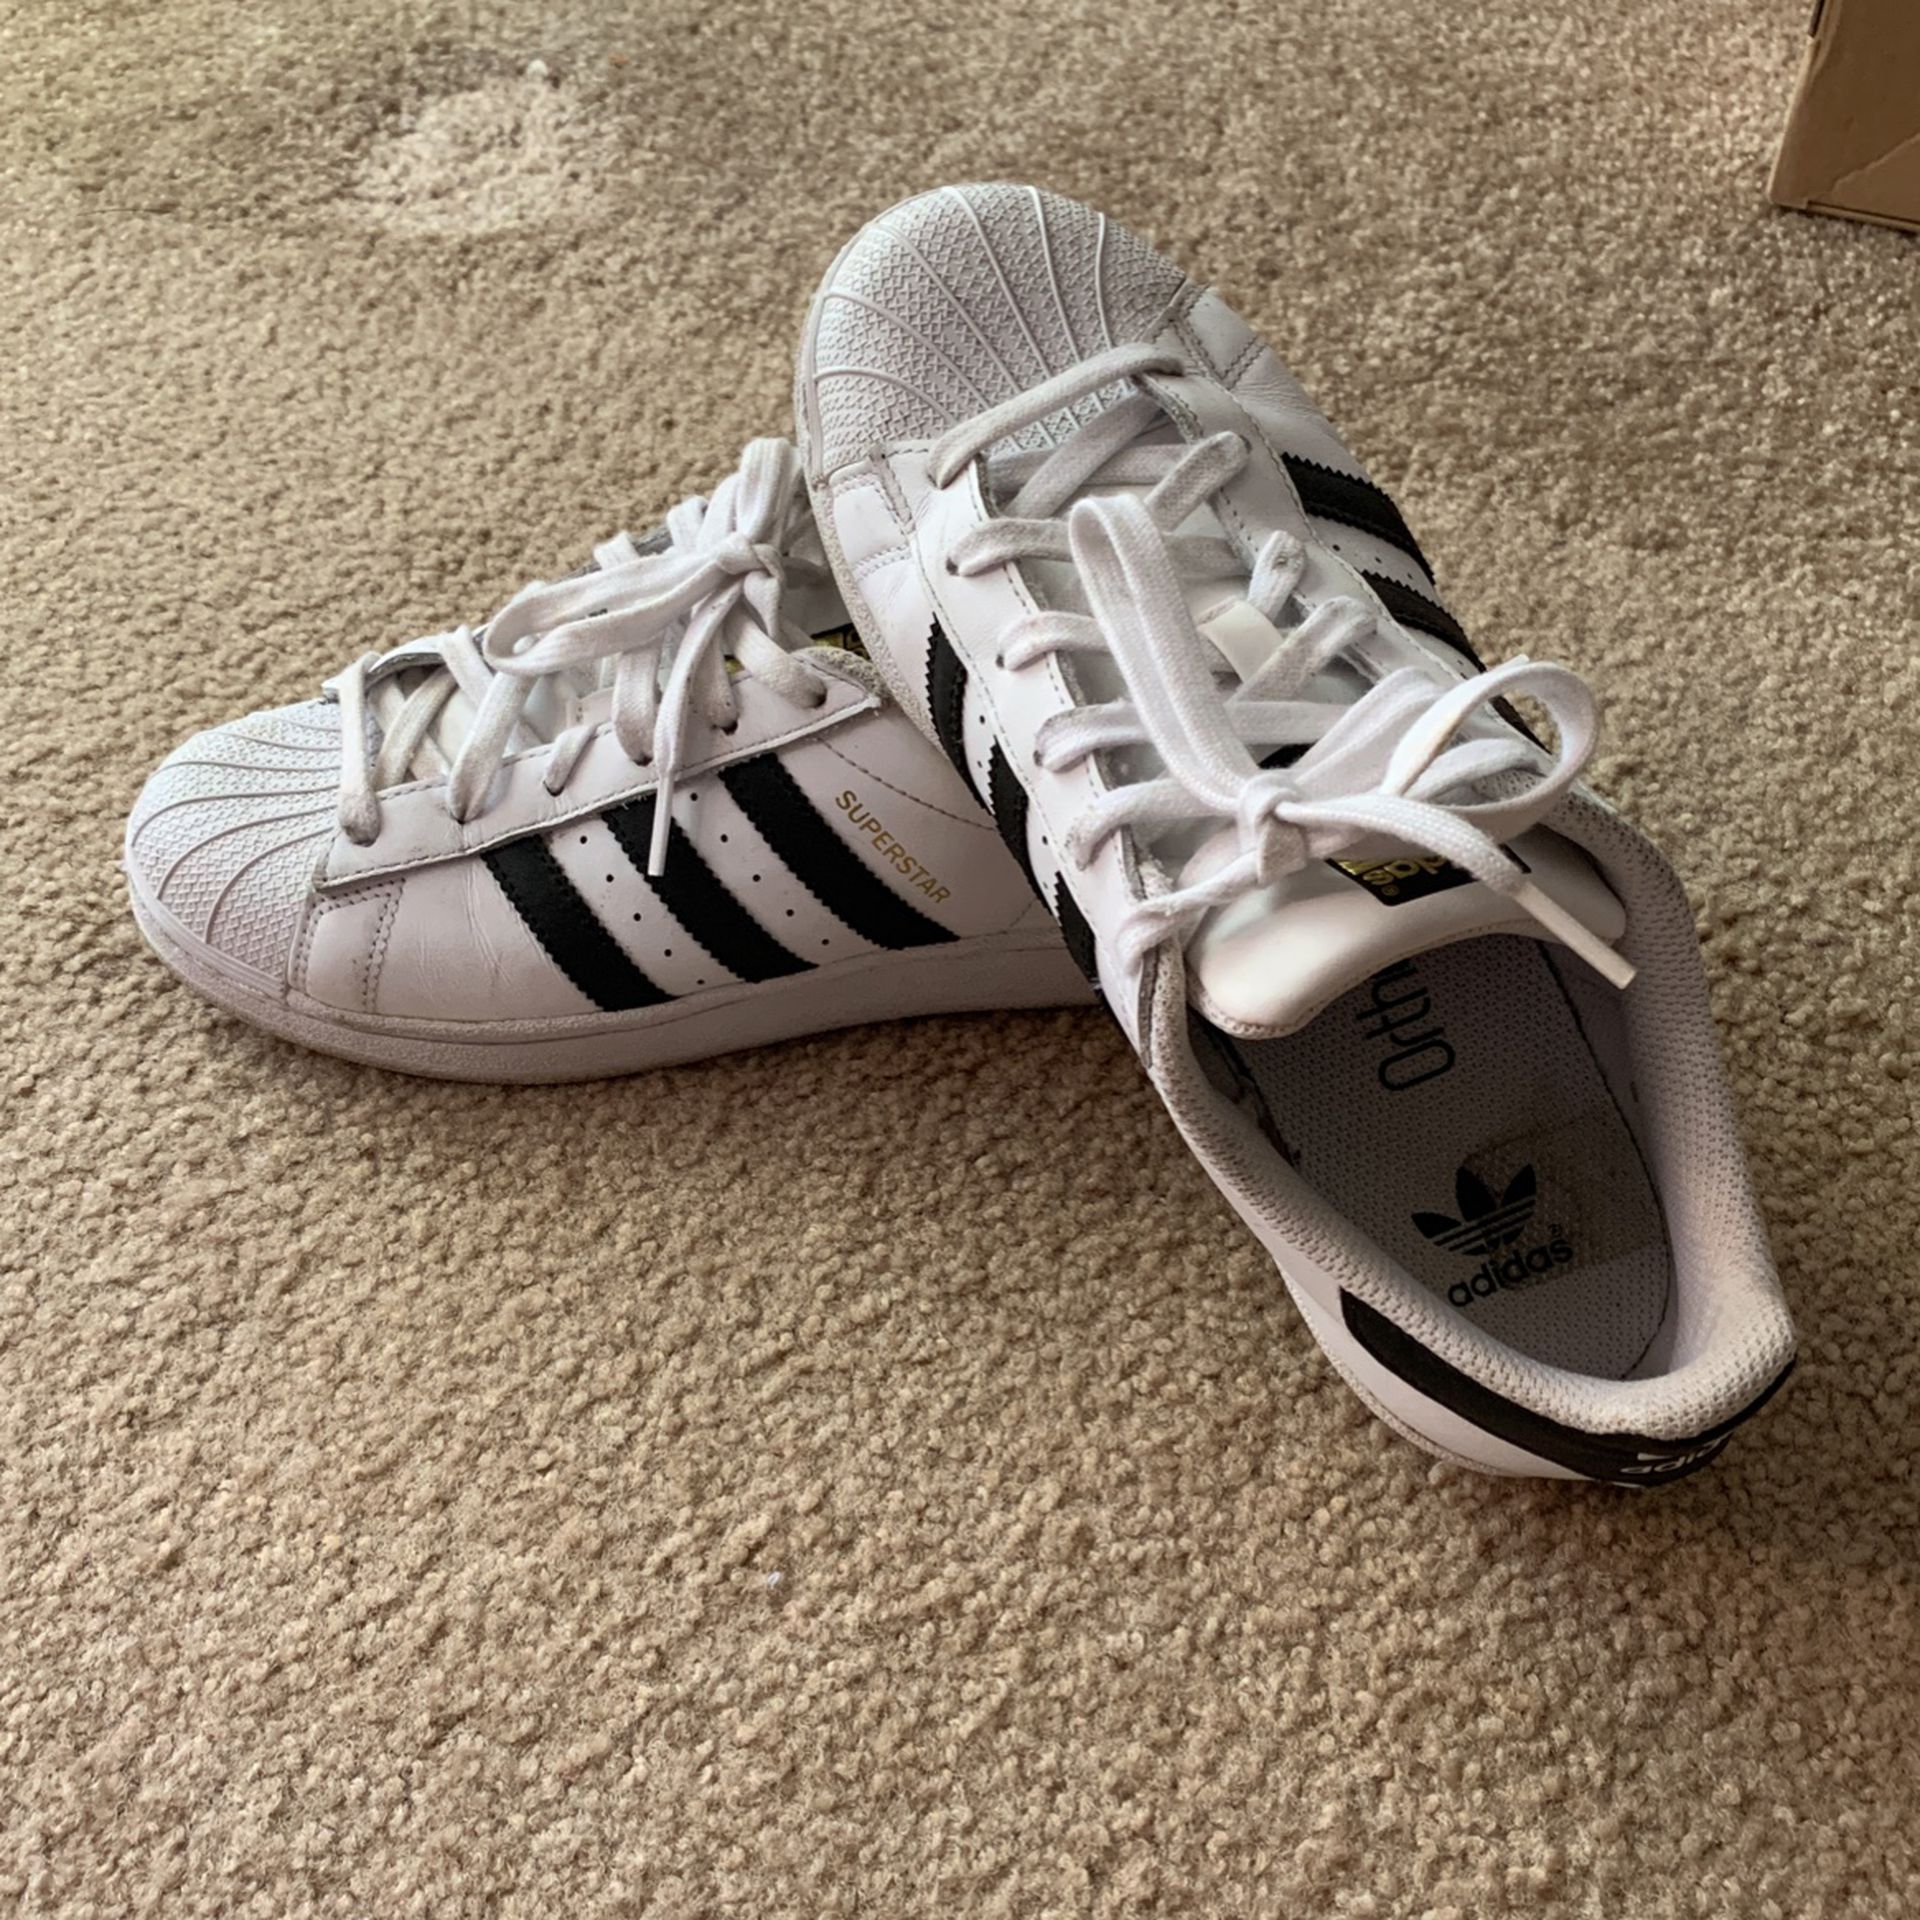 Adidas Superstar Tennis Shoes Black/White Size 5.5